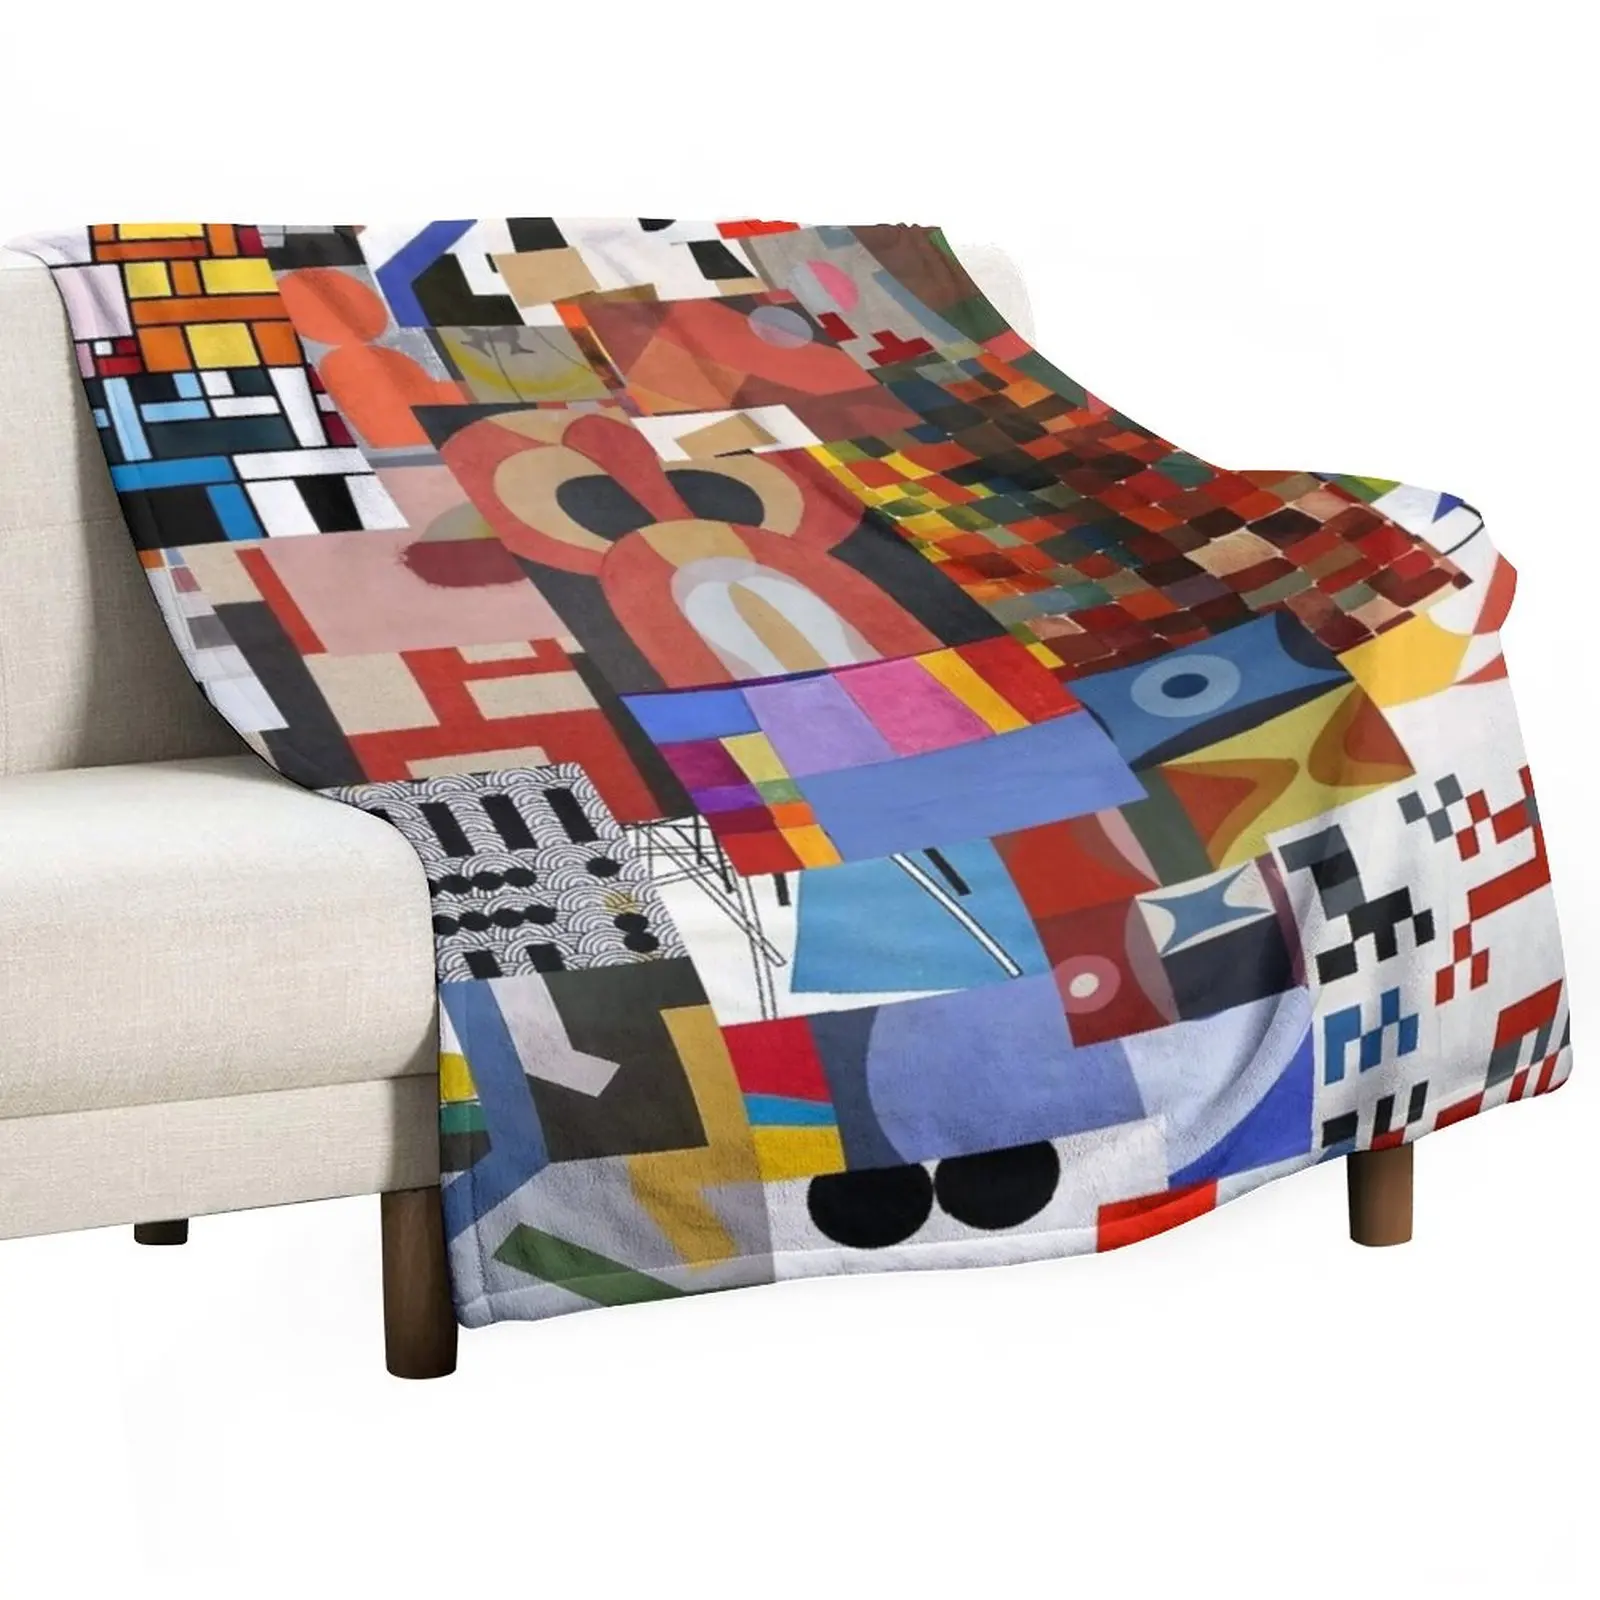 

Sophie Taeuber-Arp Throw Blanket Decorative Sofa Blanket Blanket Fluffy Soft Plaid Bed linens